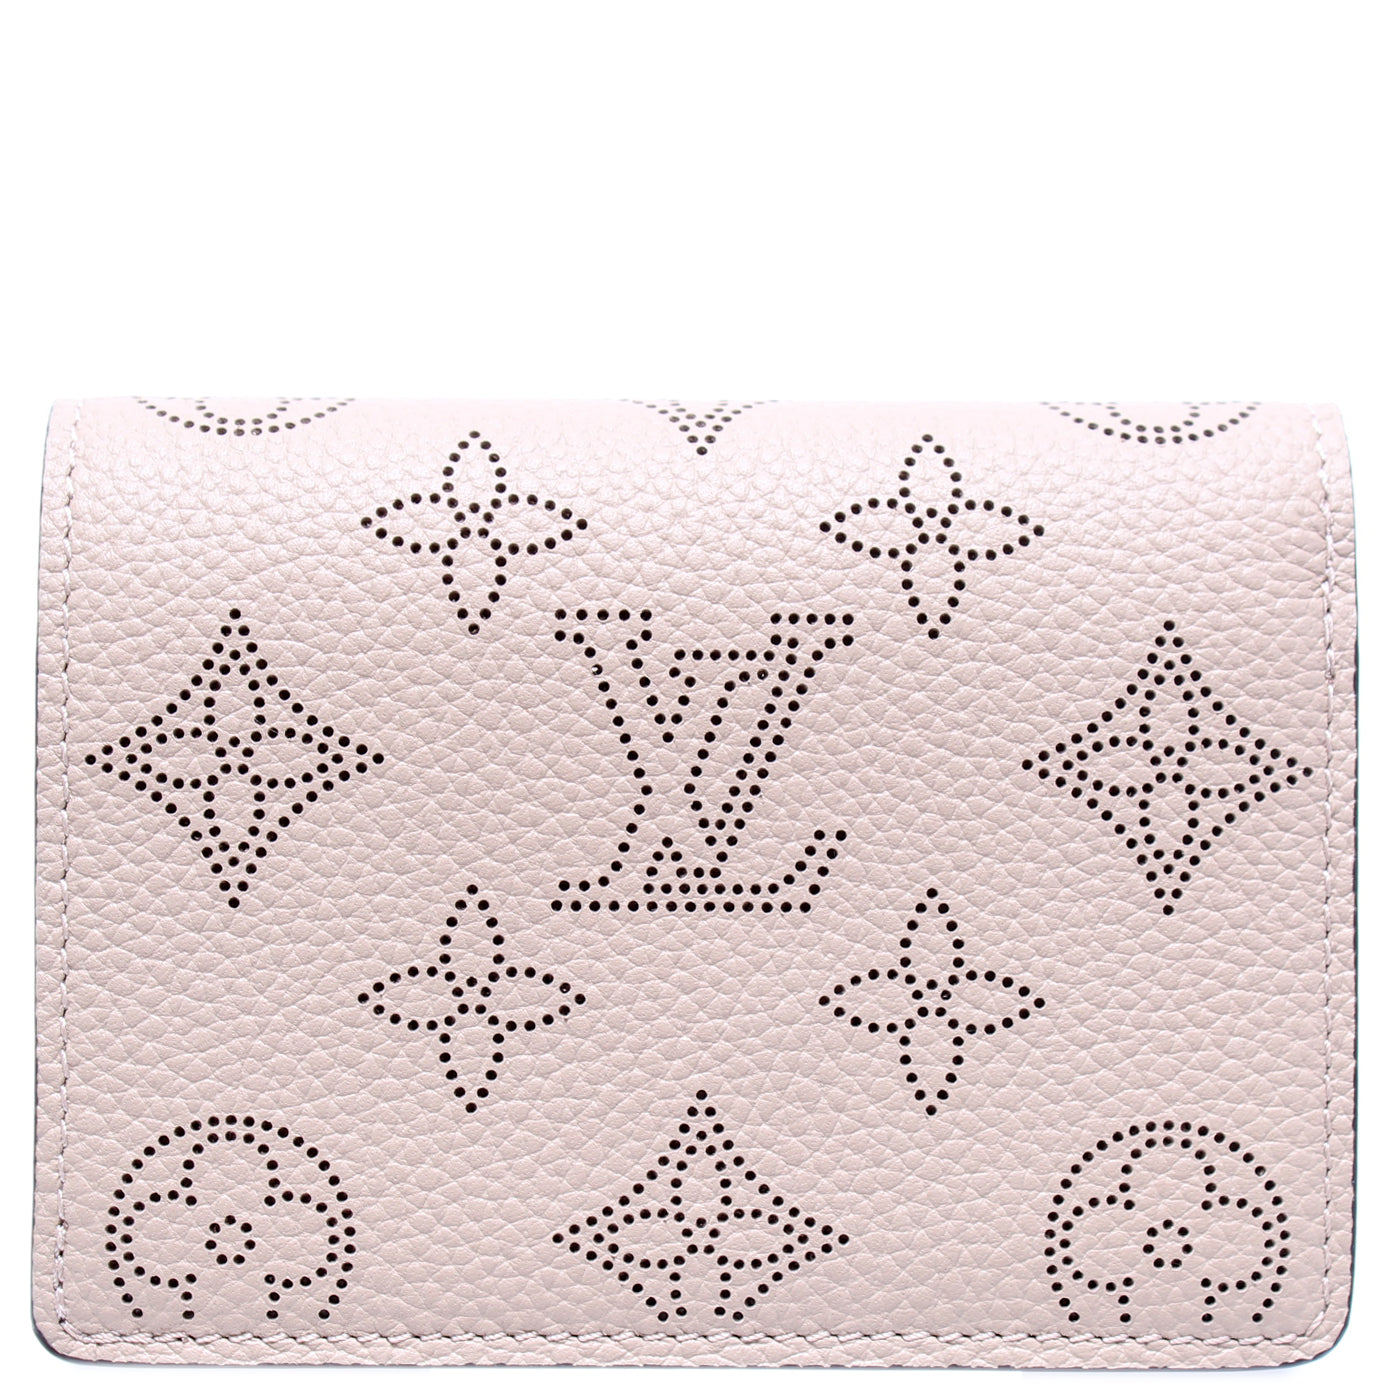 Louis Vuitton Metallic Empreinte Clea Wallet with Box